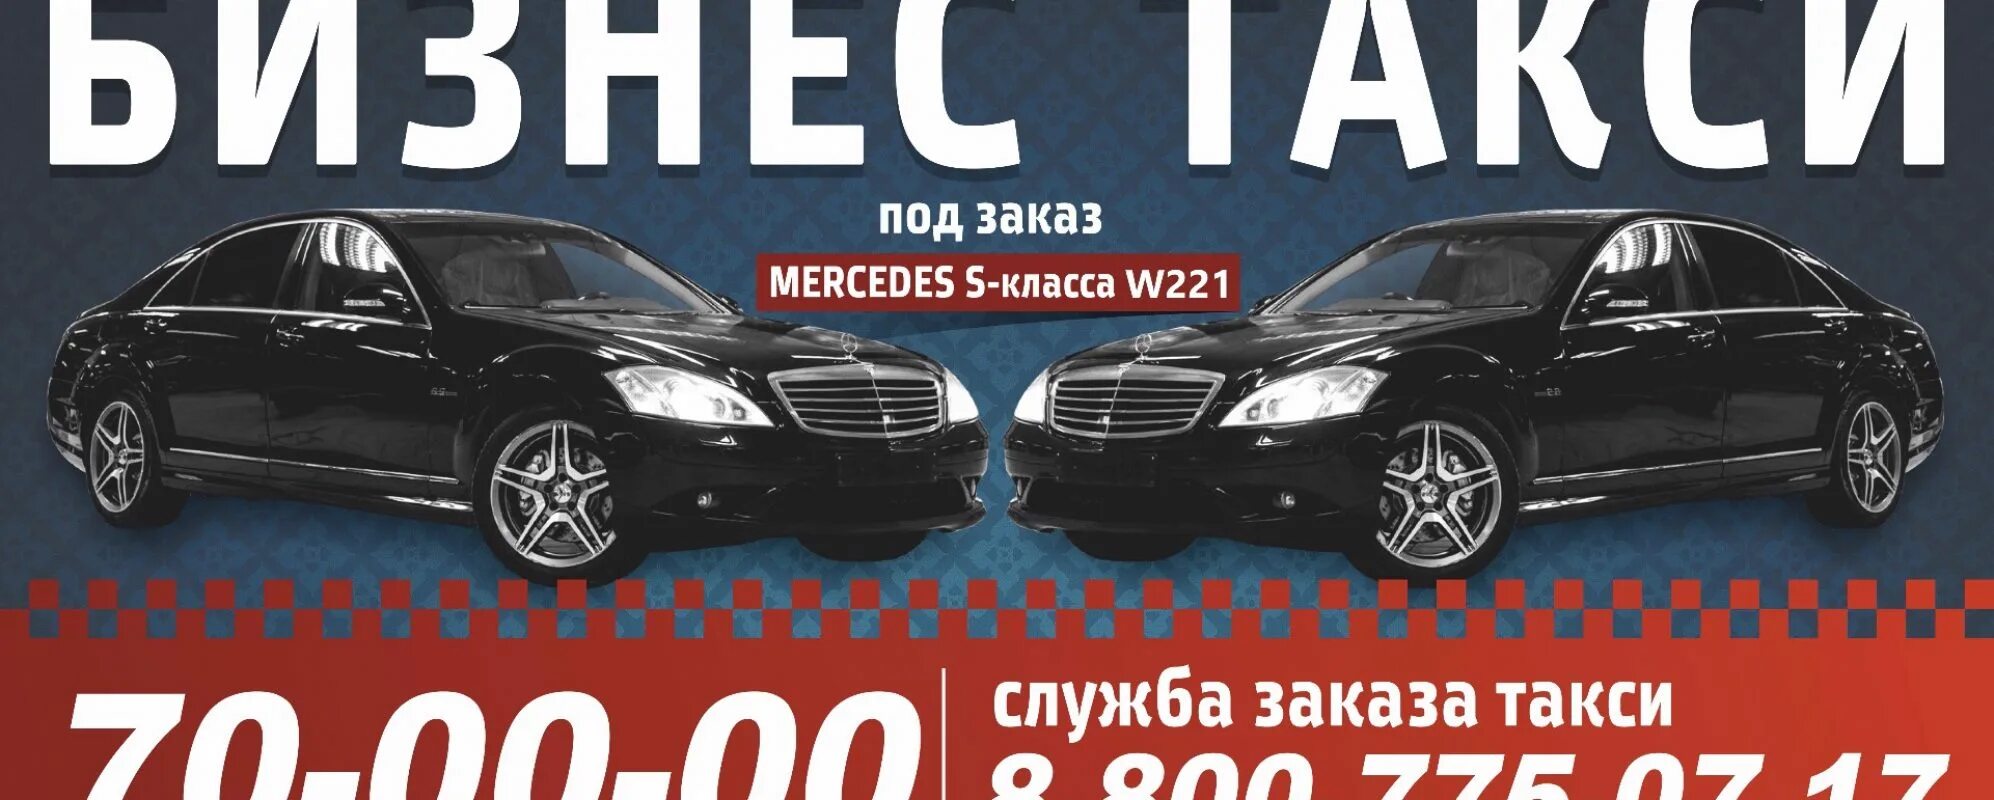 Такси бизнес класса. Бизнес такси Волгоград. Вип такси Волгоград. Такси в Волгограде номера телефонов.